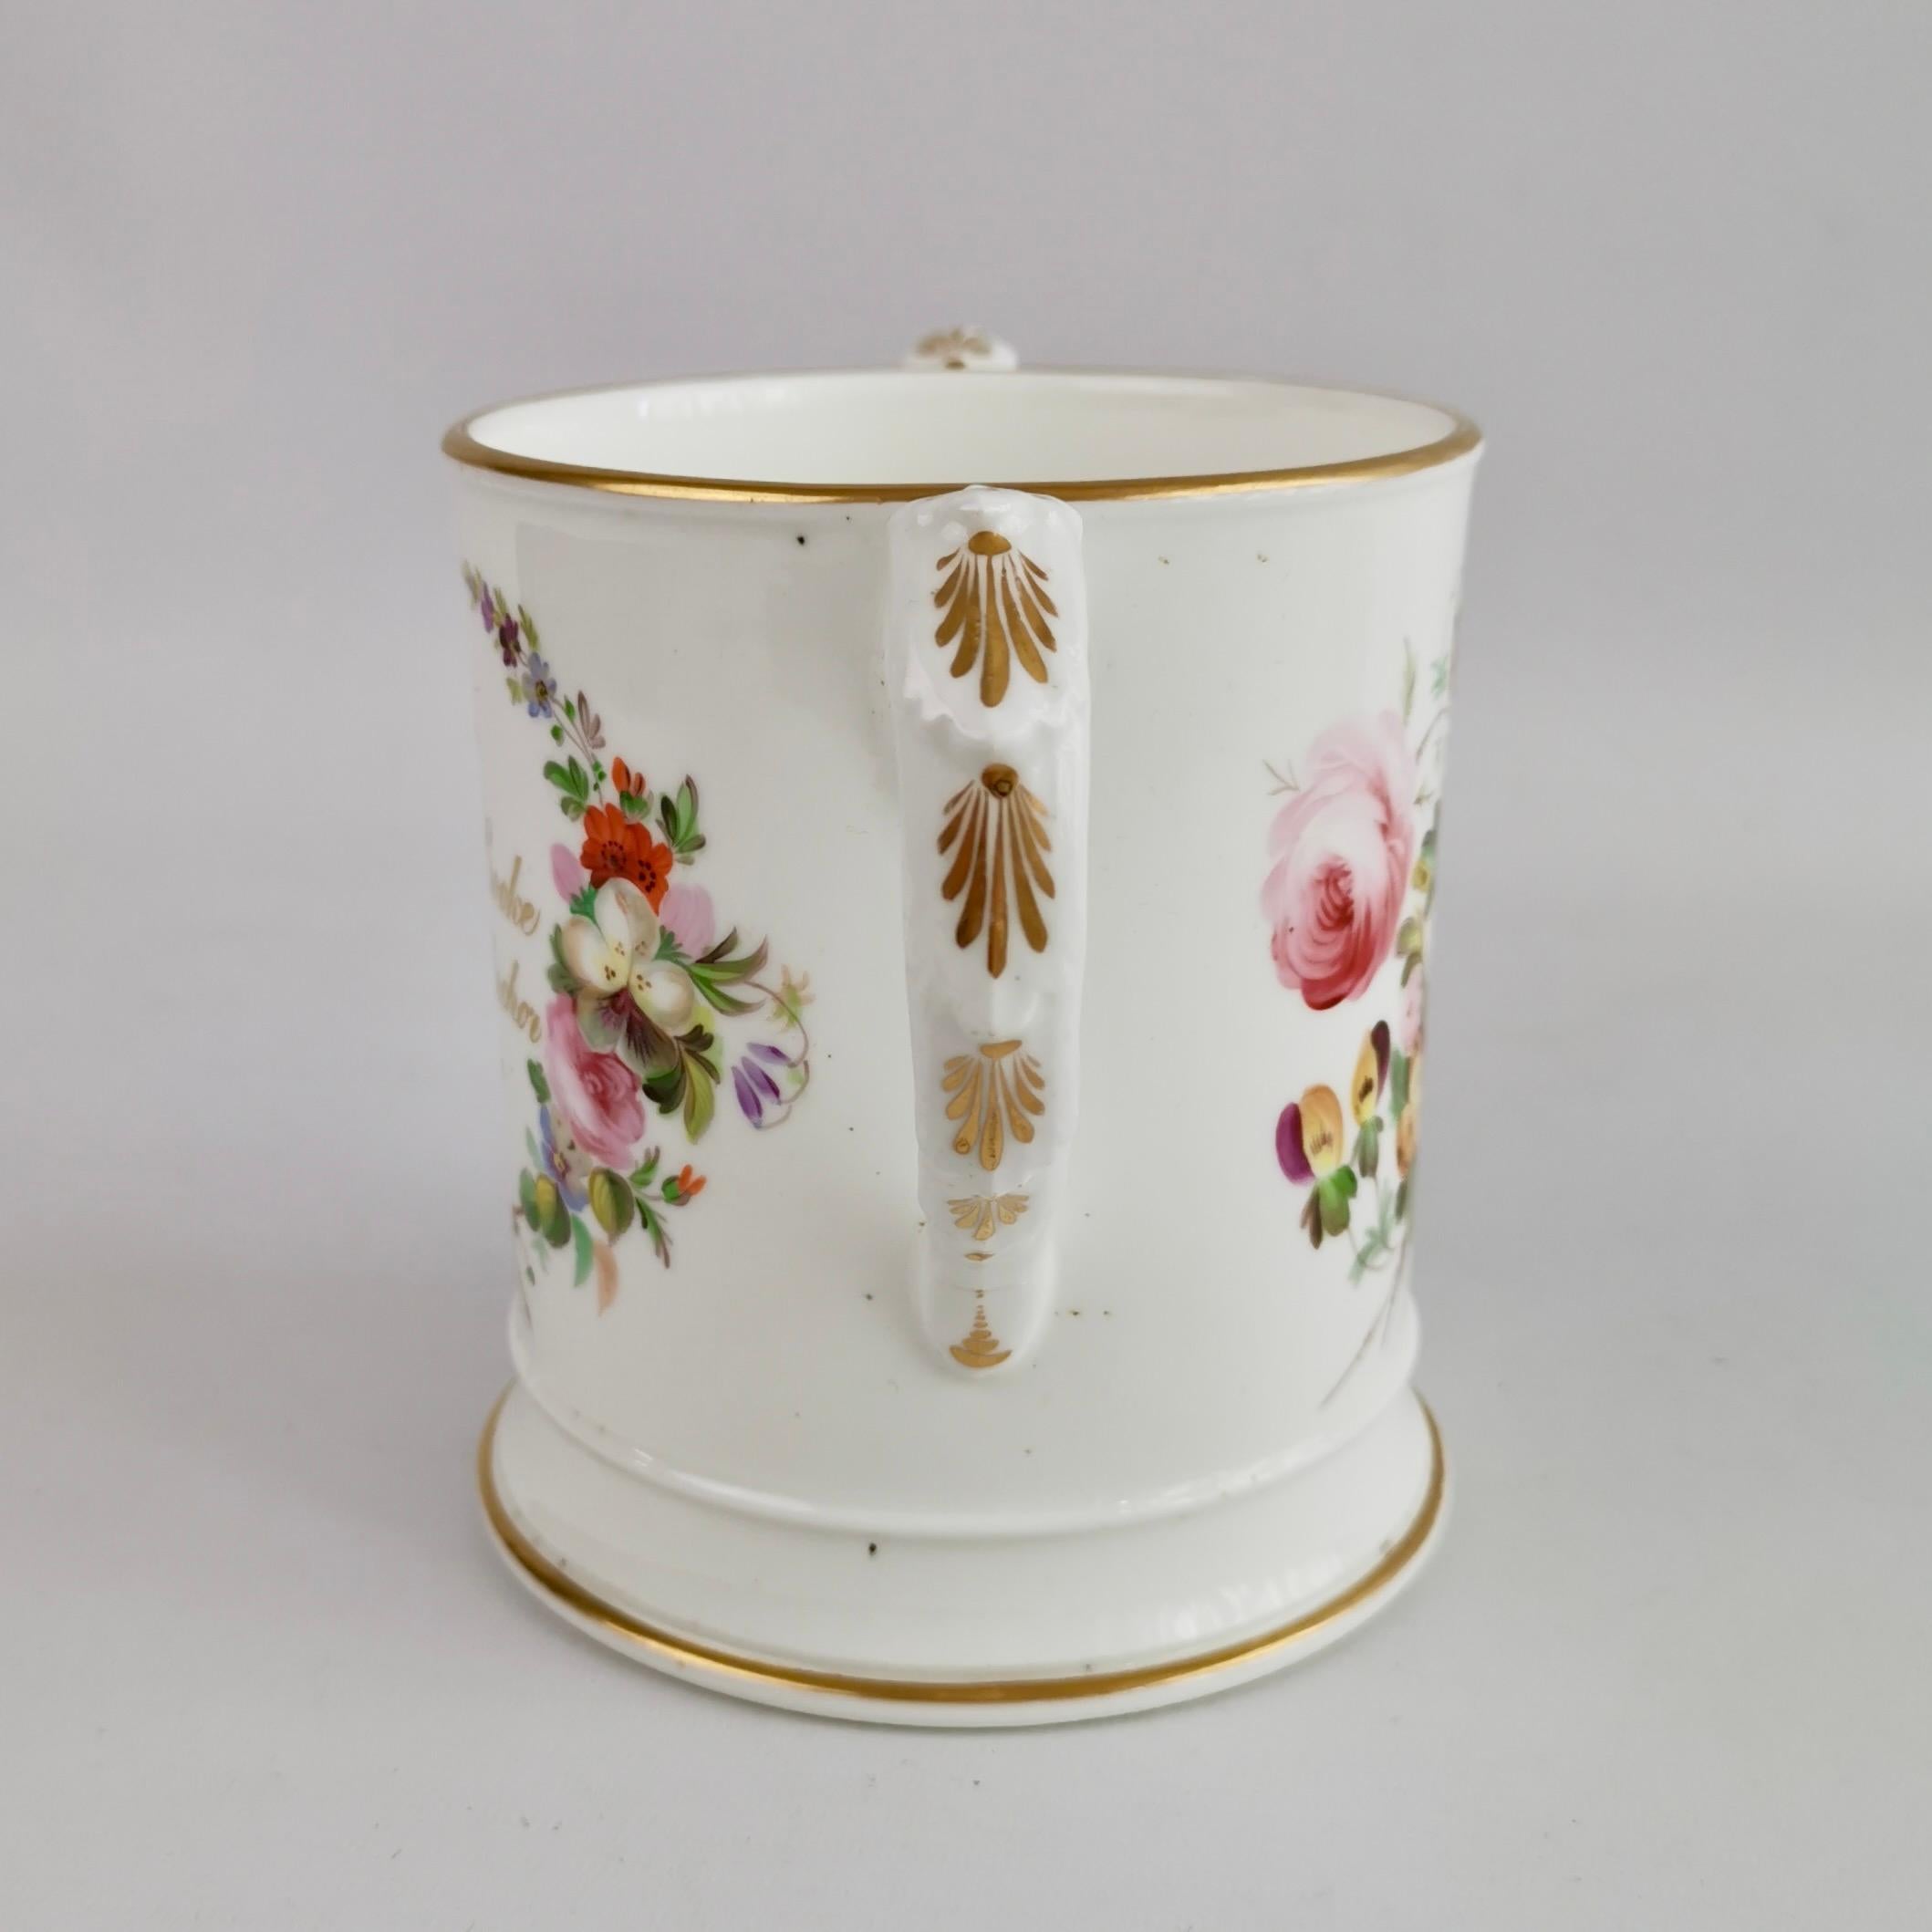 English Coalport Porcelain Porter Mug, Flowers by Thomas Dixon for William Cooke, 1845